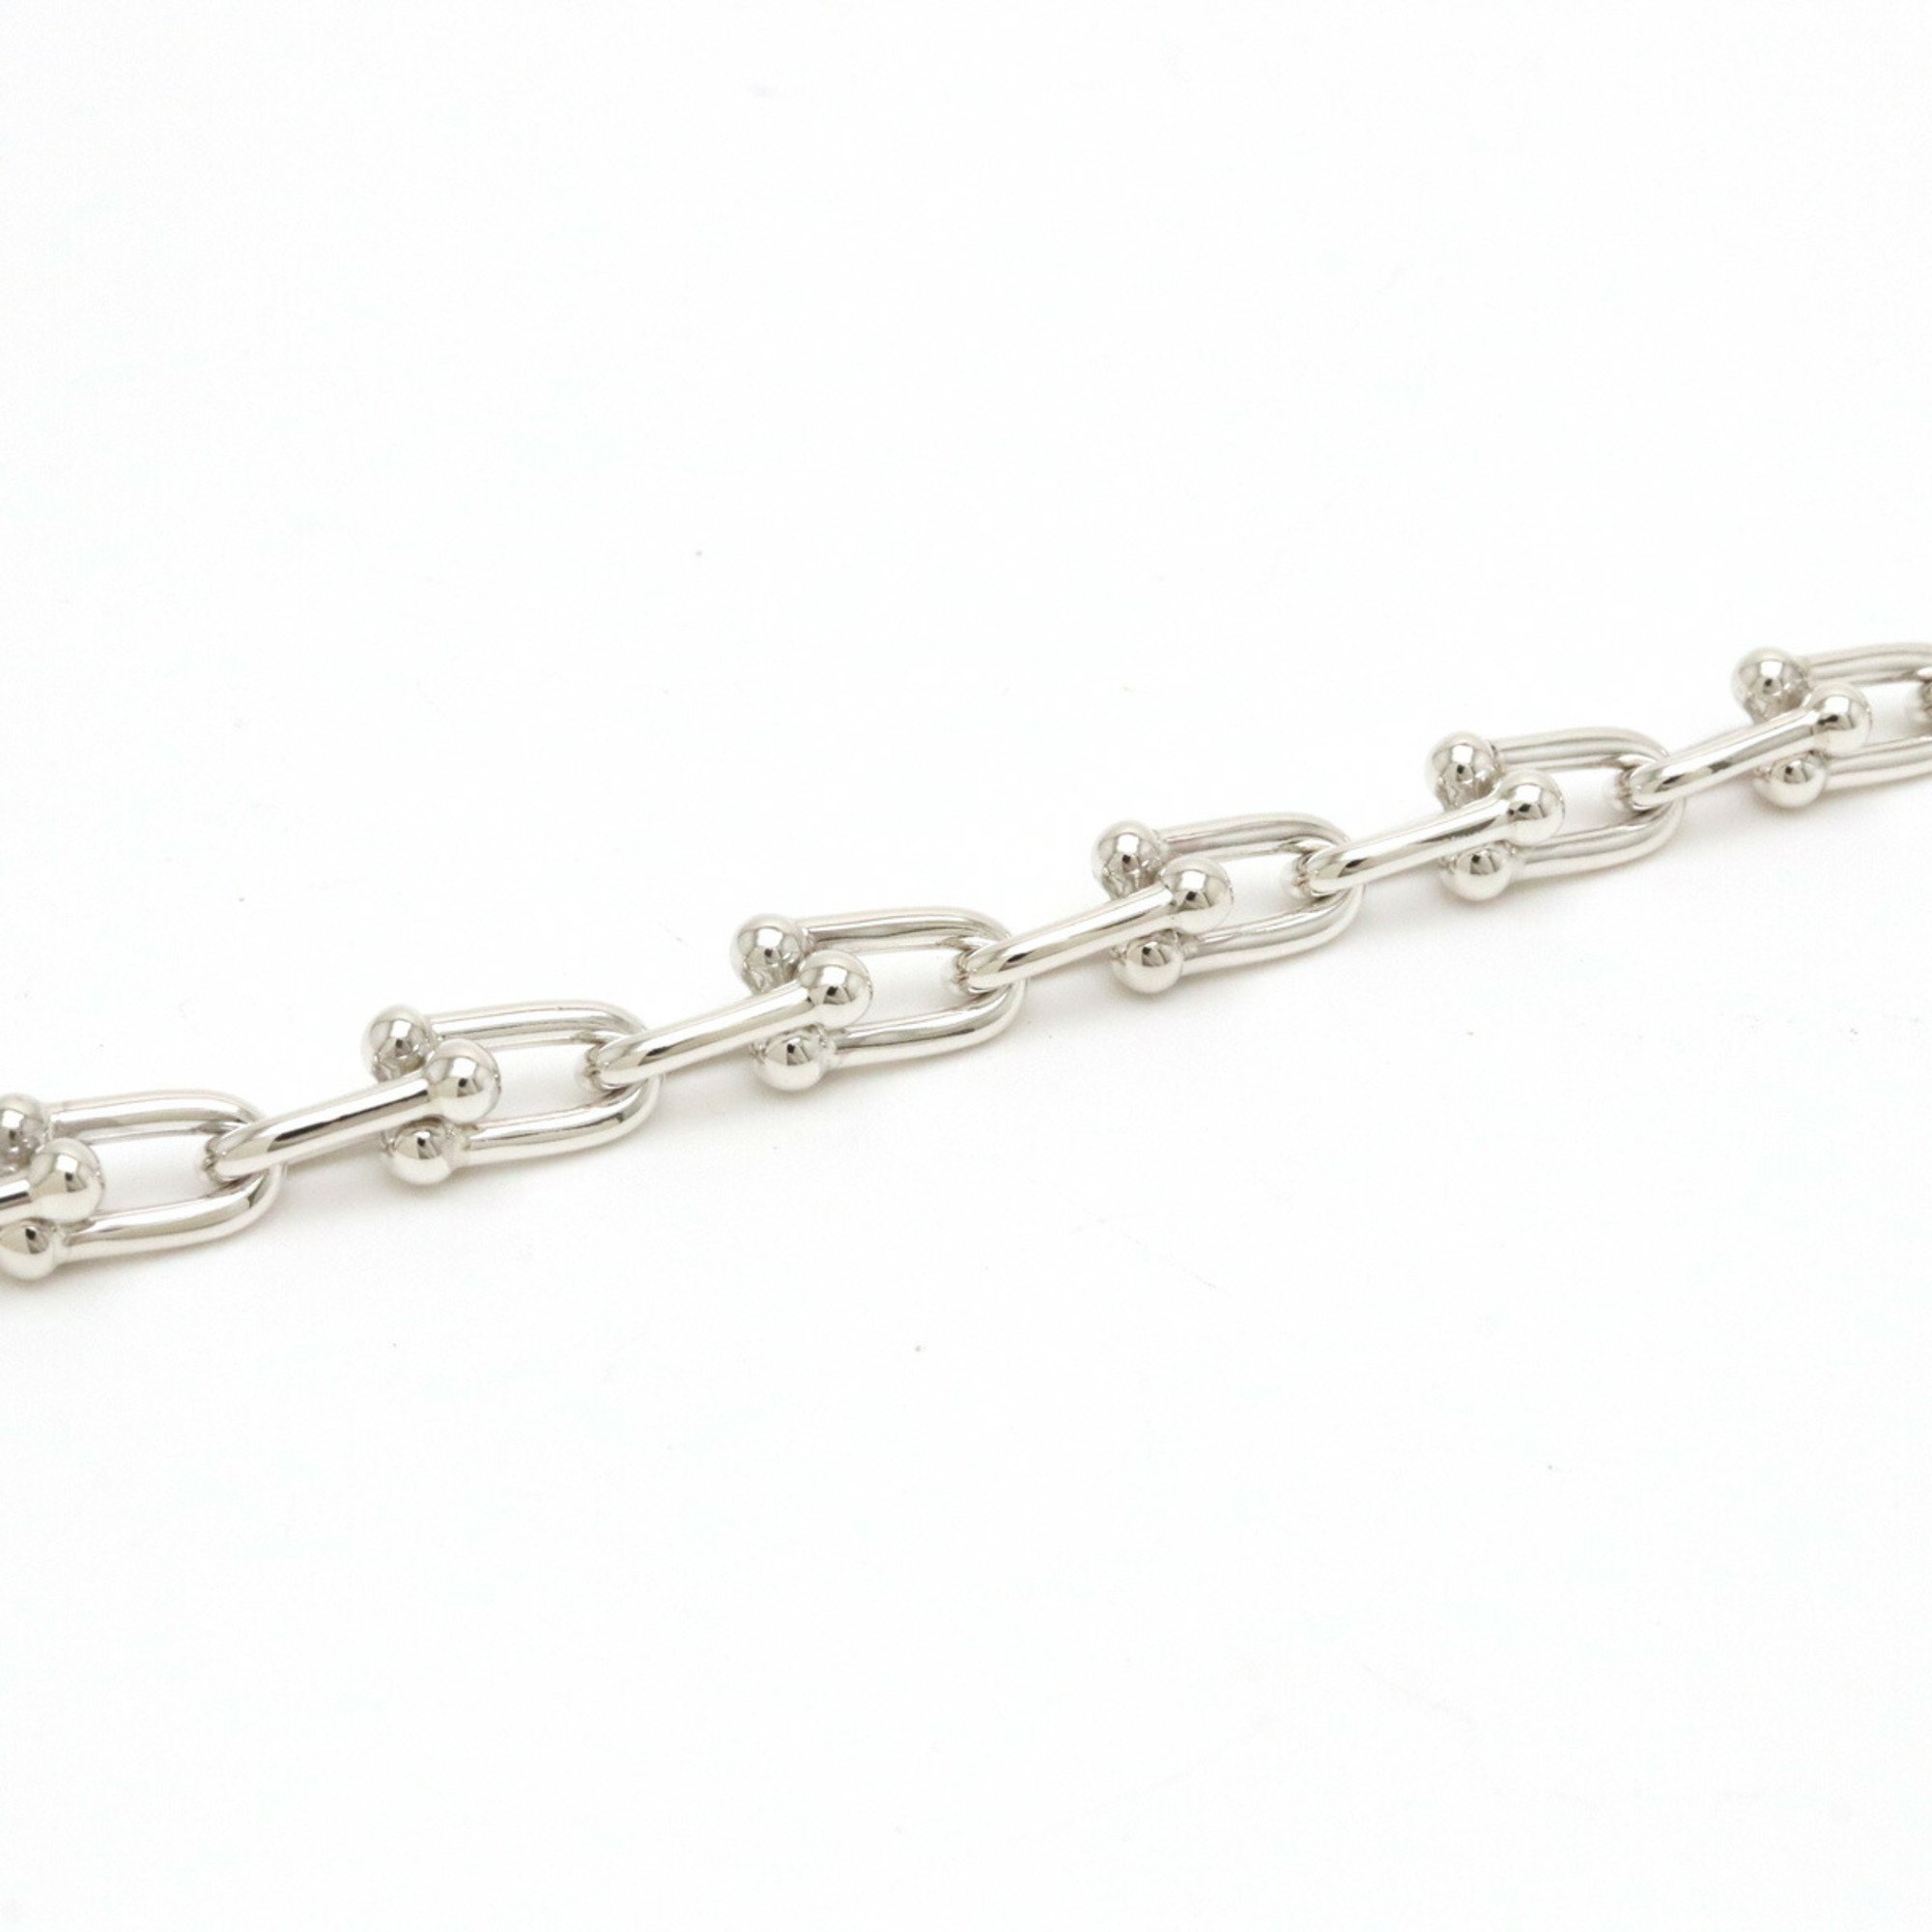 TIFFANY&Co. Tiffany Hardware Small Link Bracelet Size SV925 Ag925 Sterling Silver Frame Cut